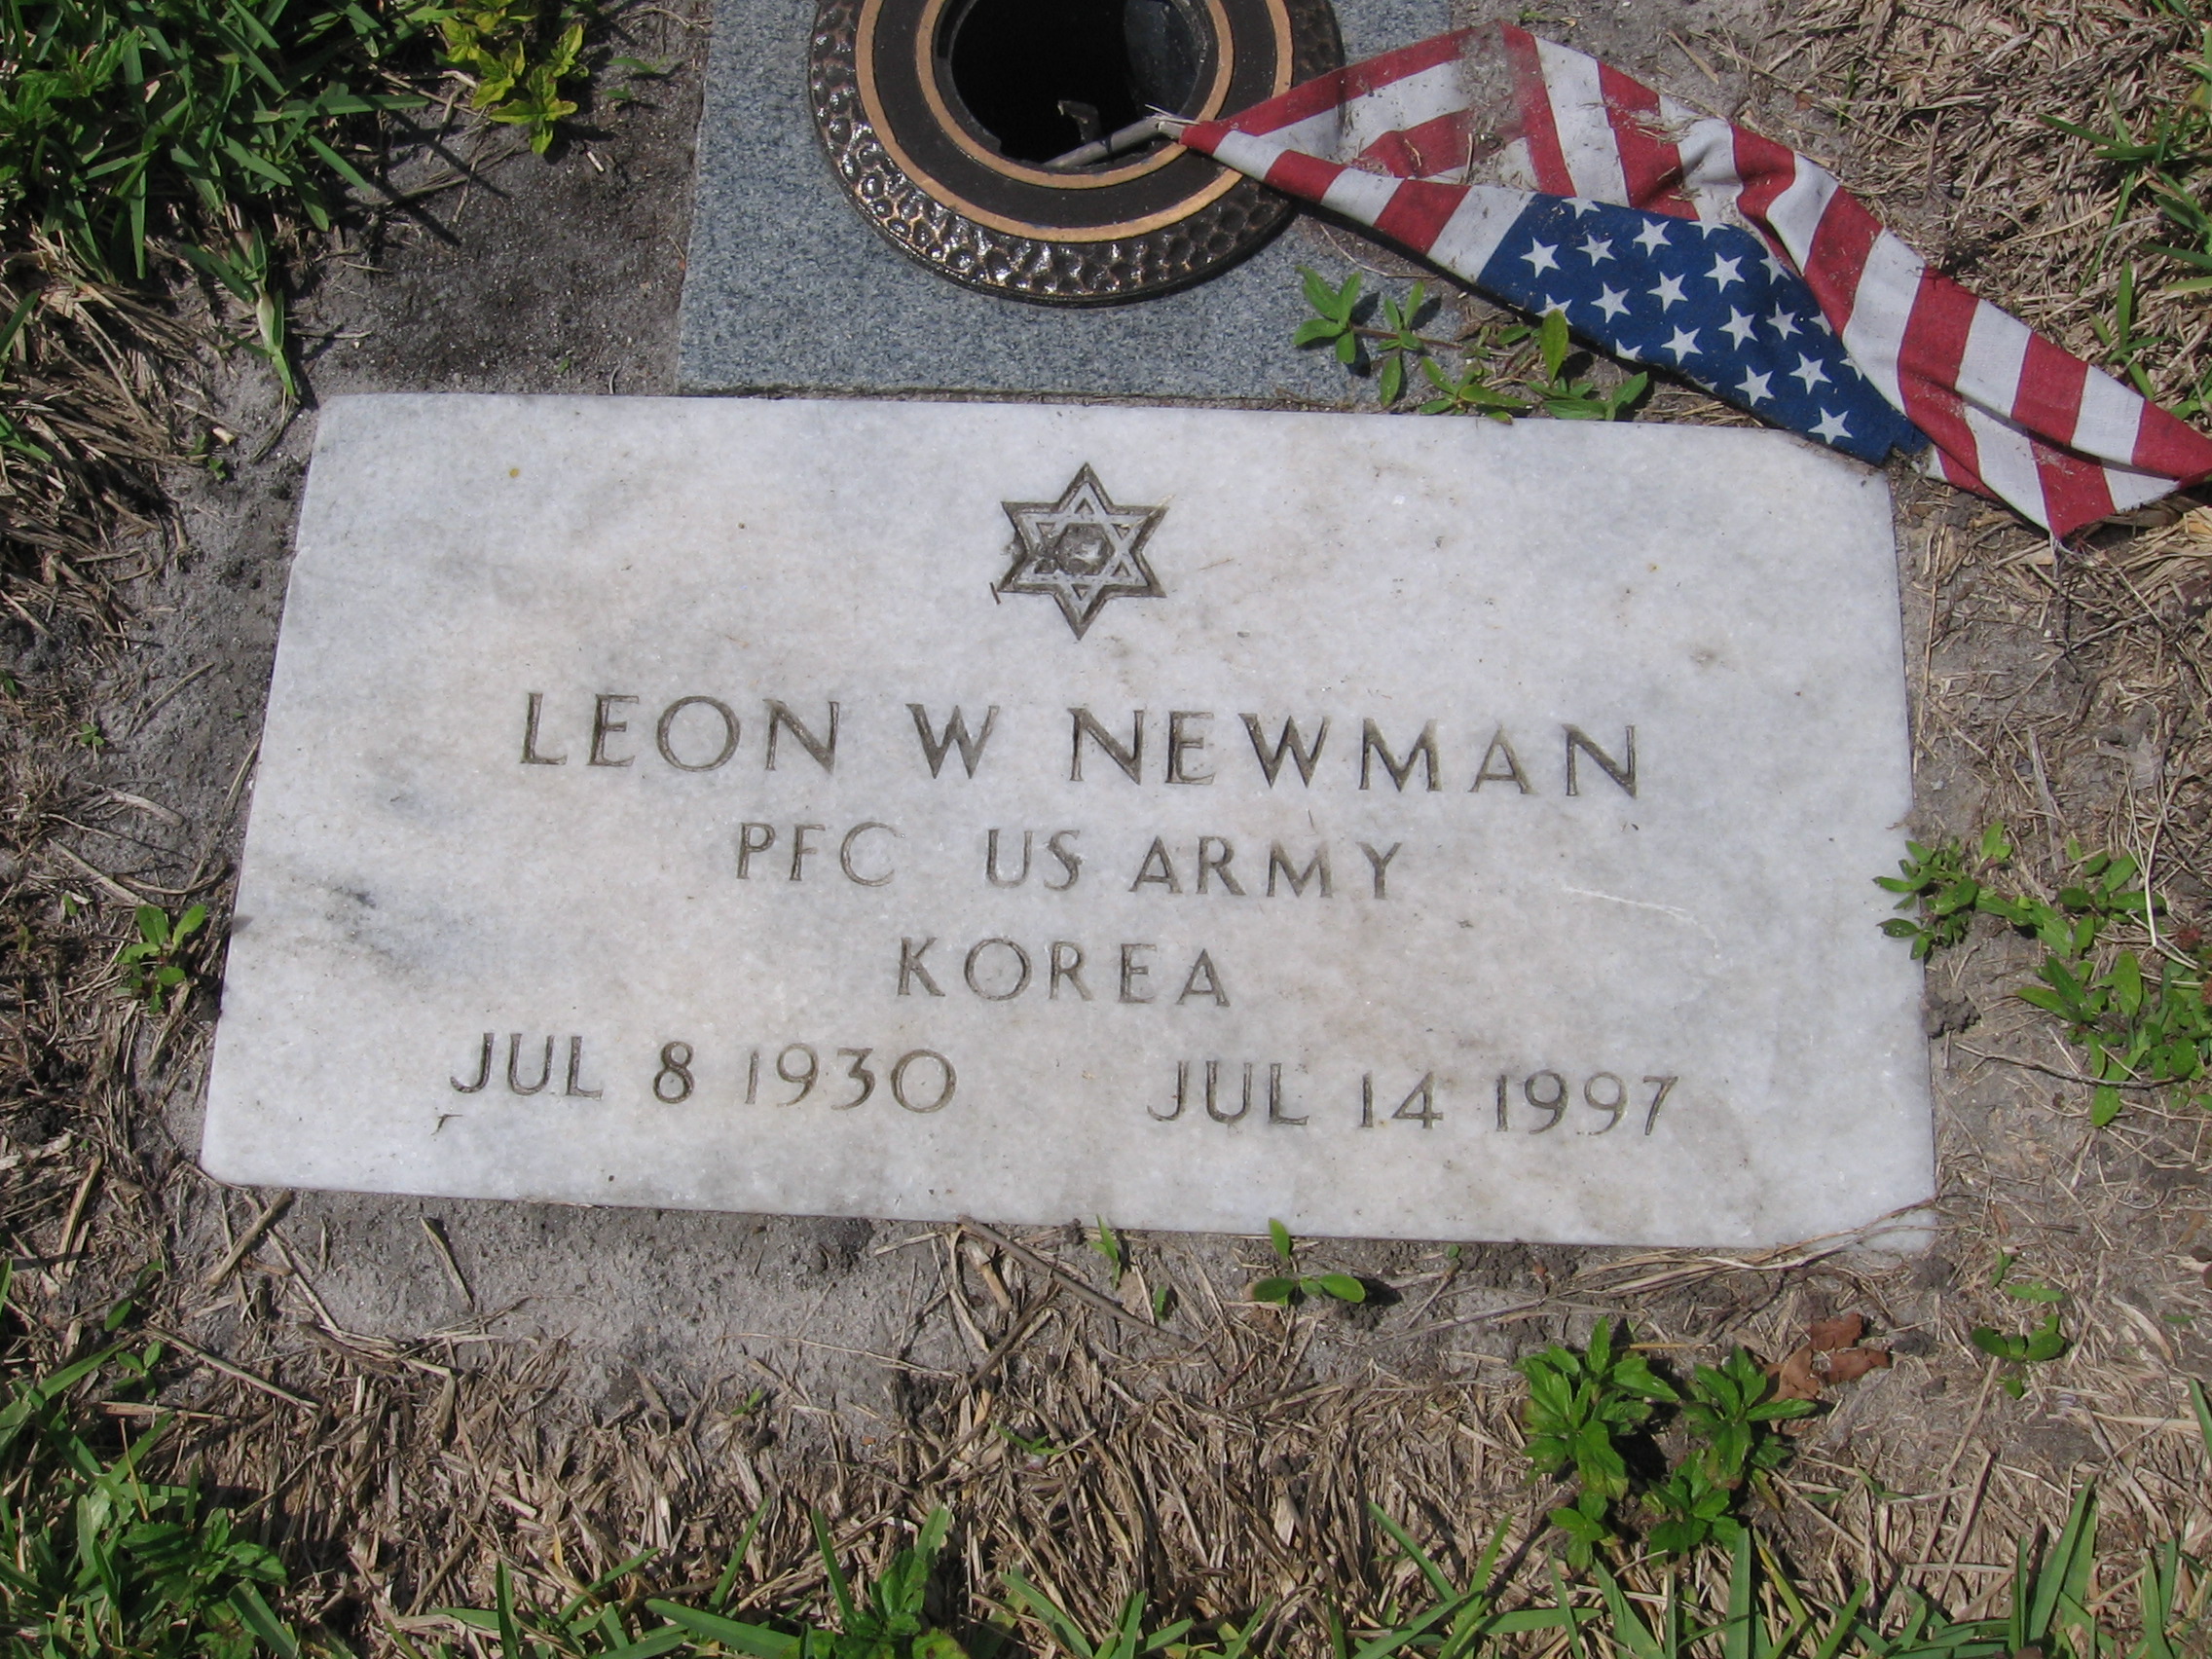 PFC Leon W Newman